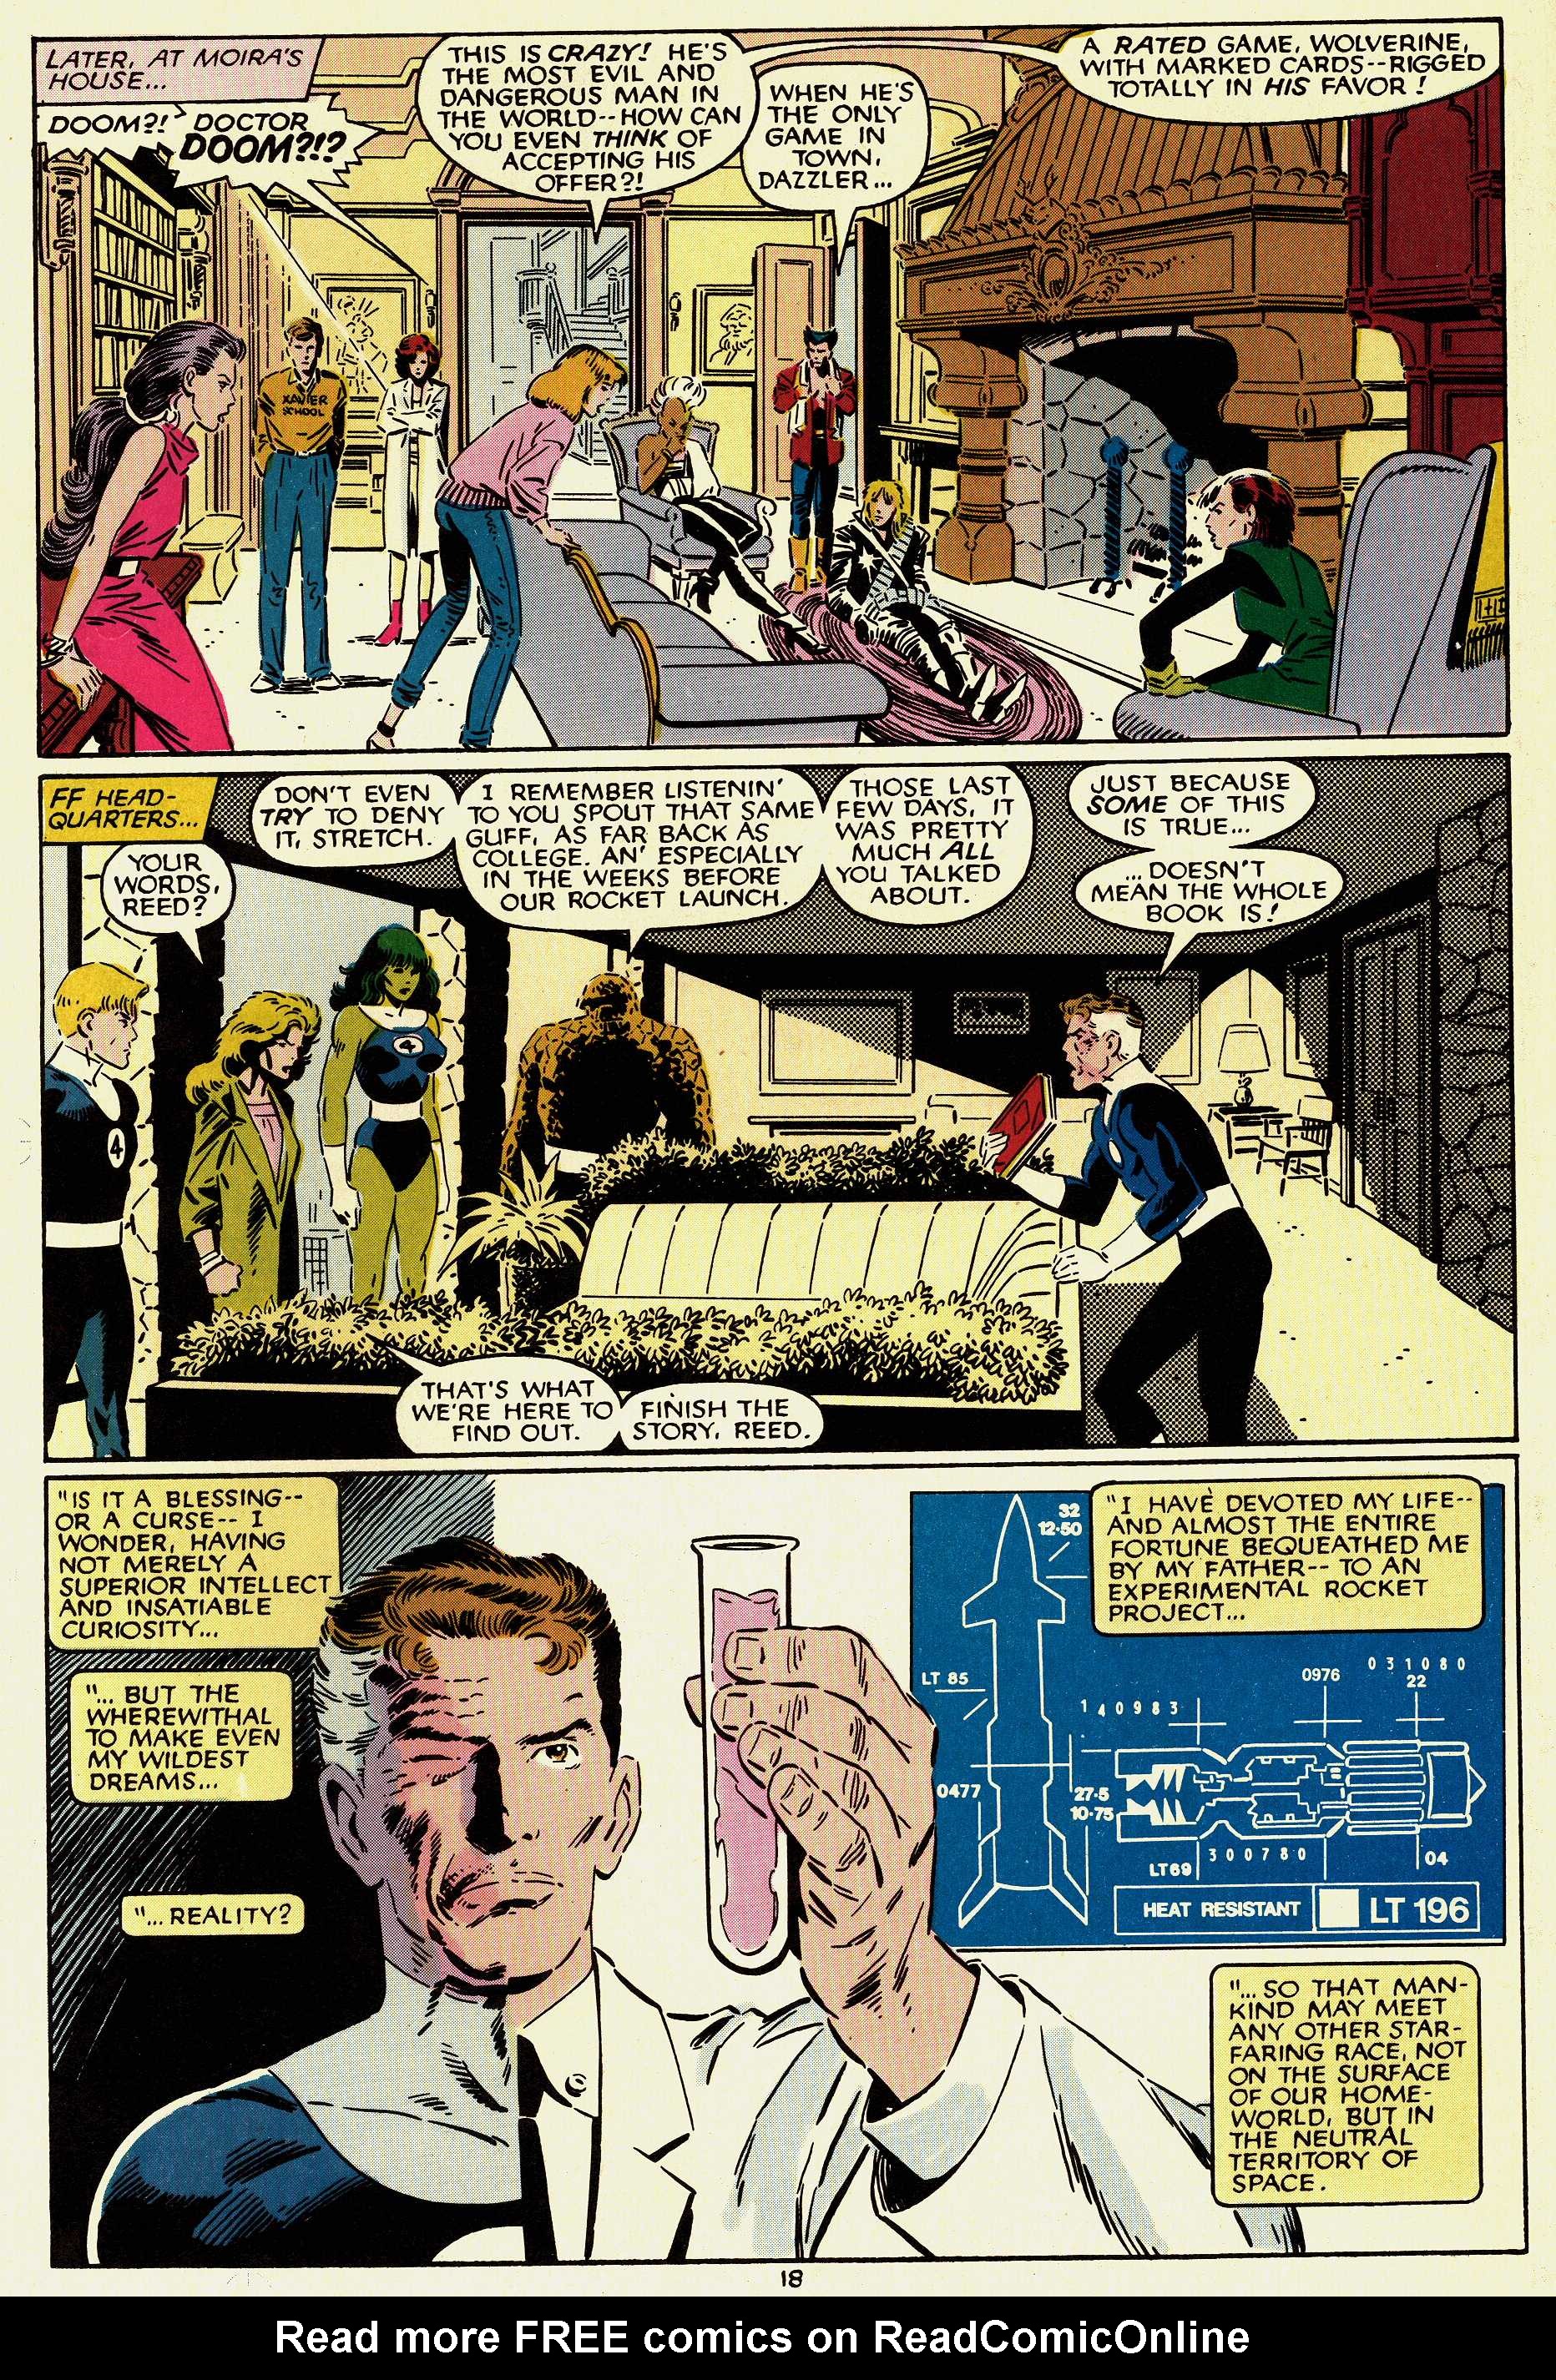 Read online Fantastic Four vs. X-Men comic -  Issue #2 - 19